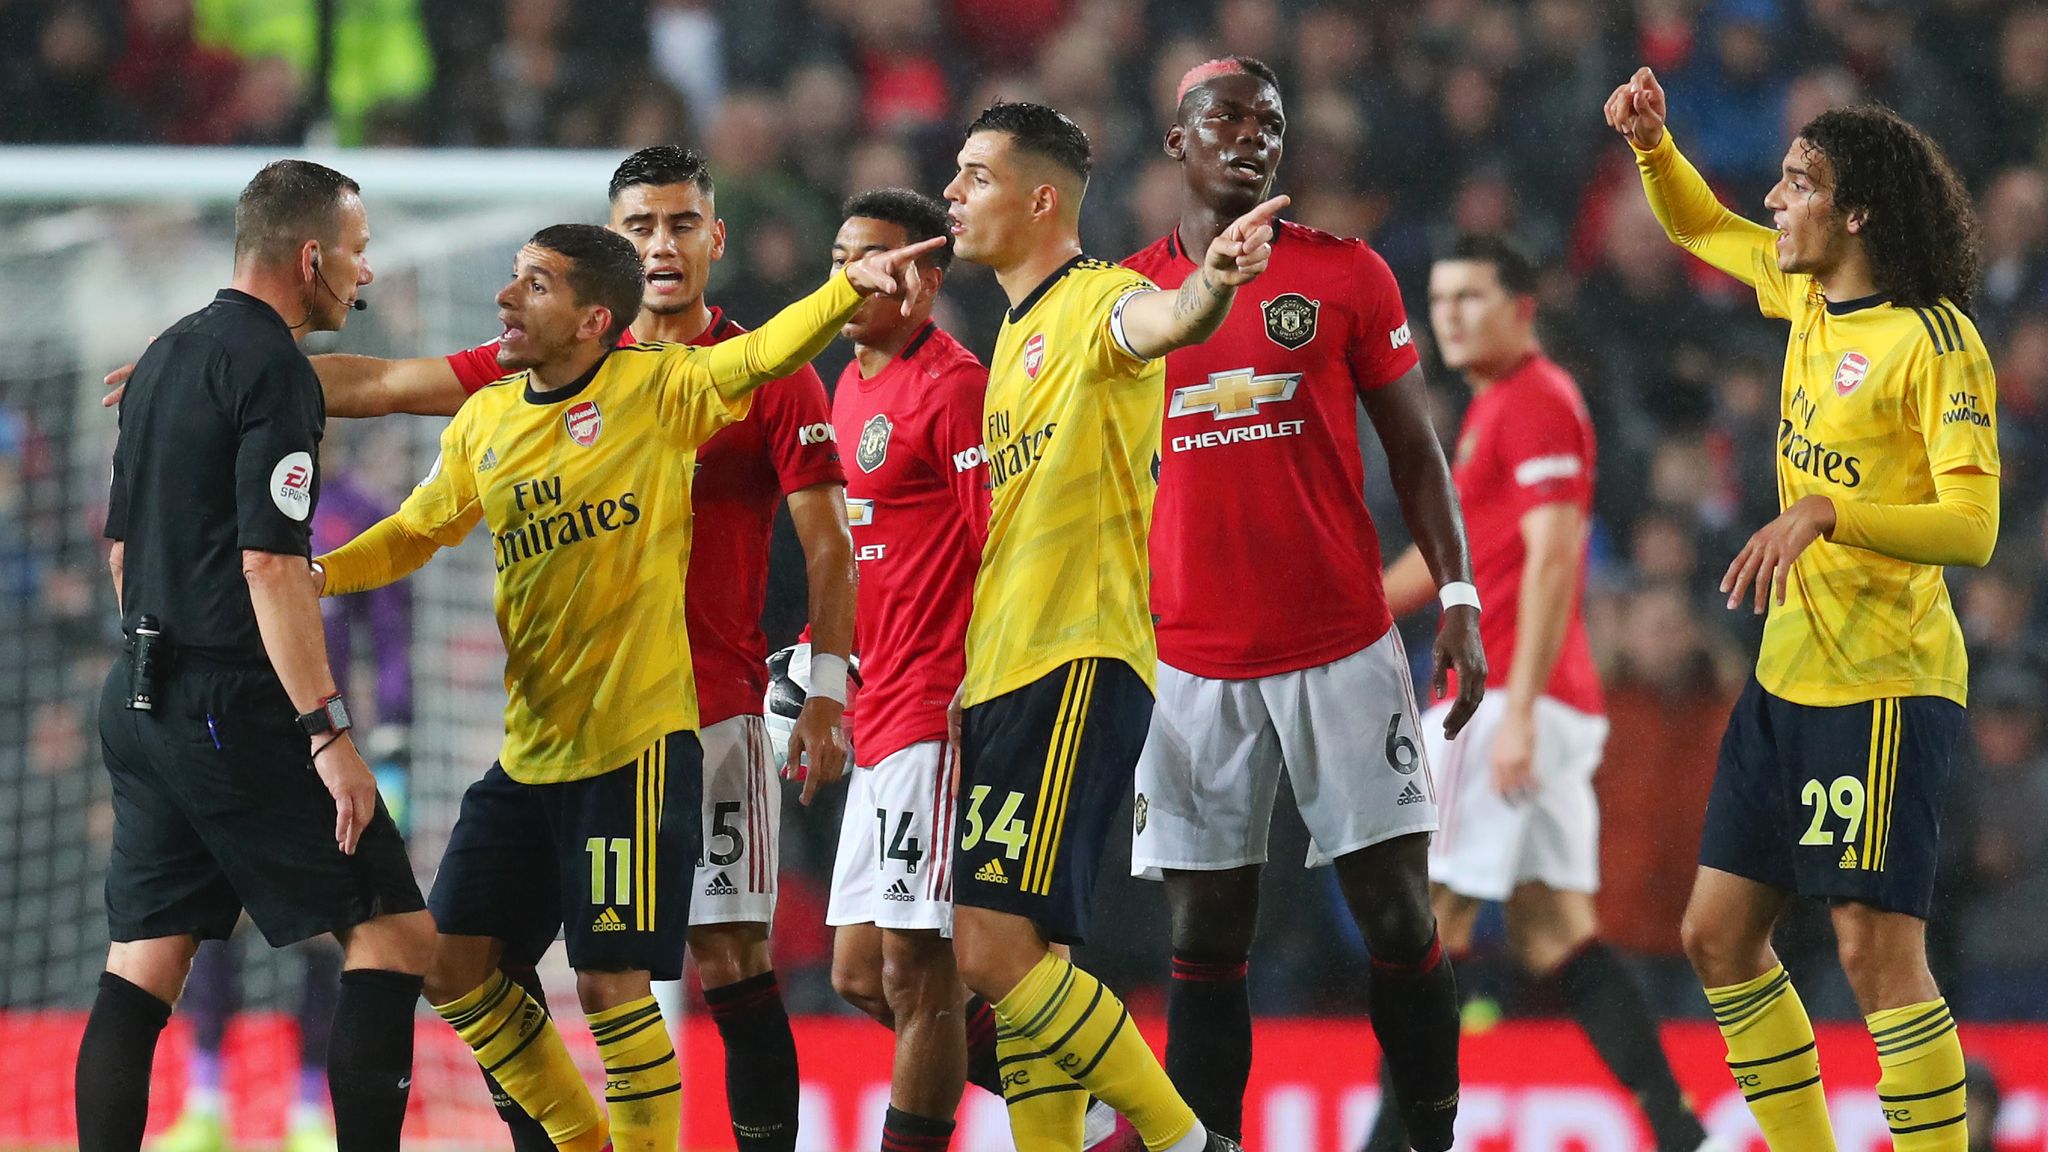 Match preview: Manchester United vs Arsenal – utdreport